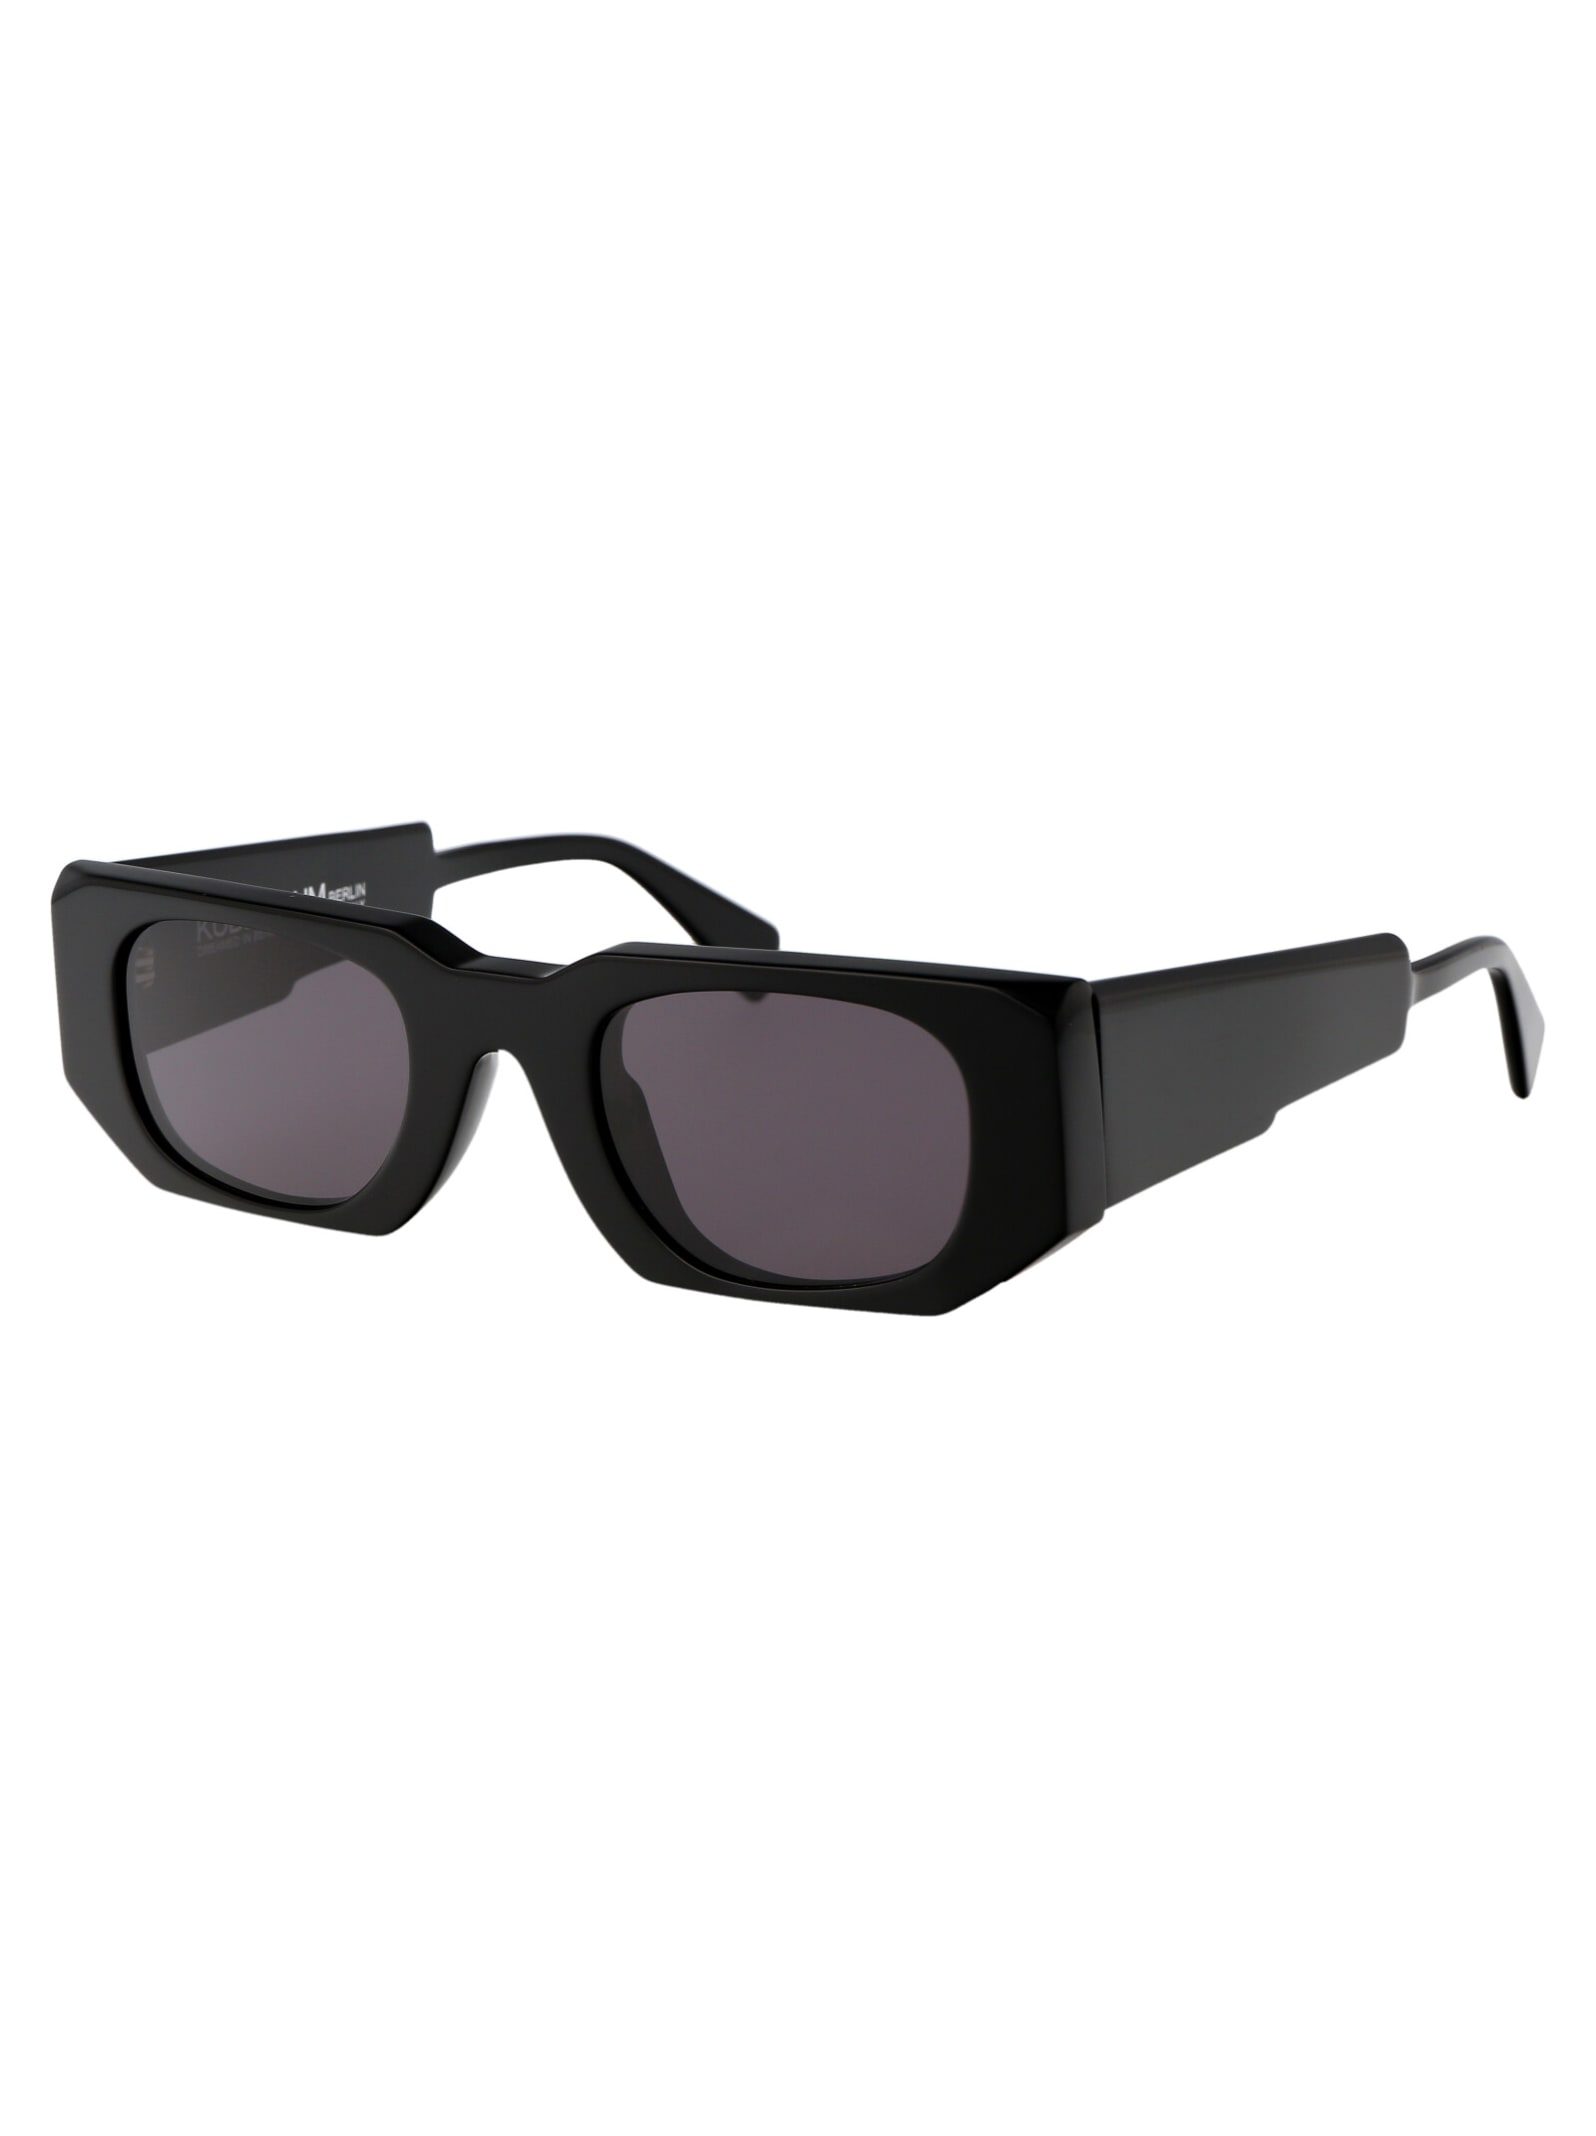 Shop Kuboraum Maske U8 Sunglasses In Bs 2grey